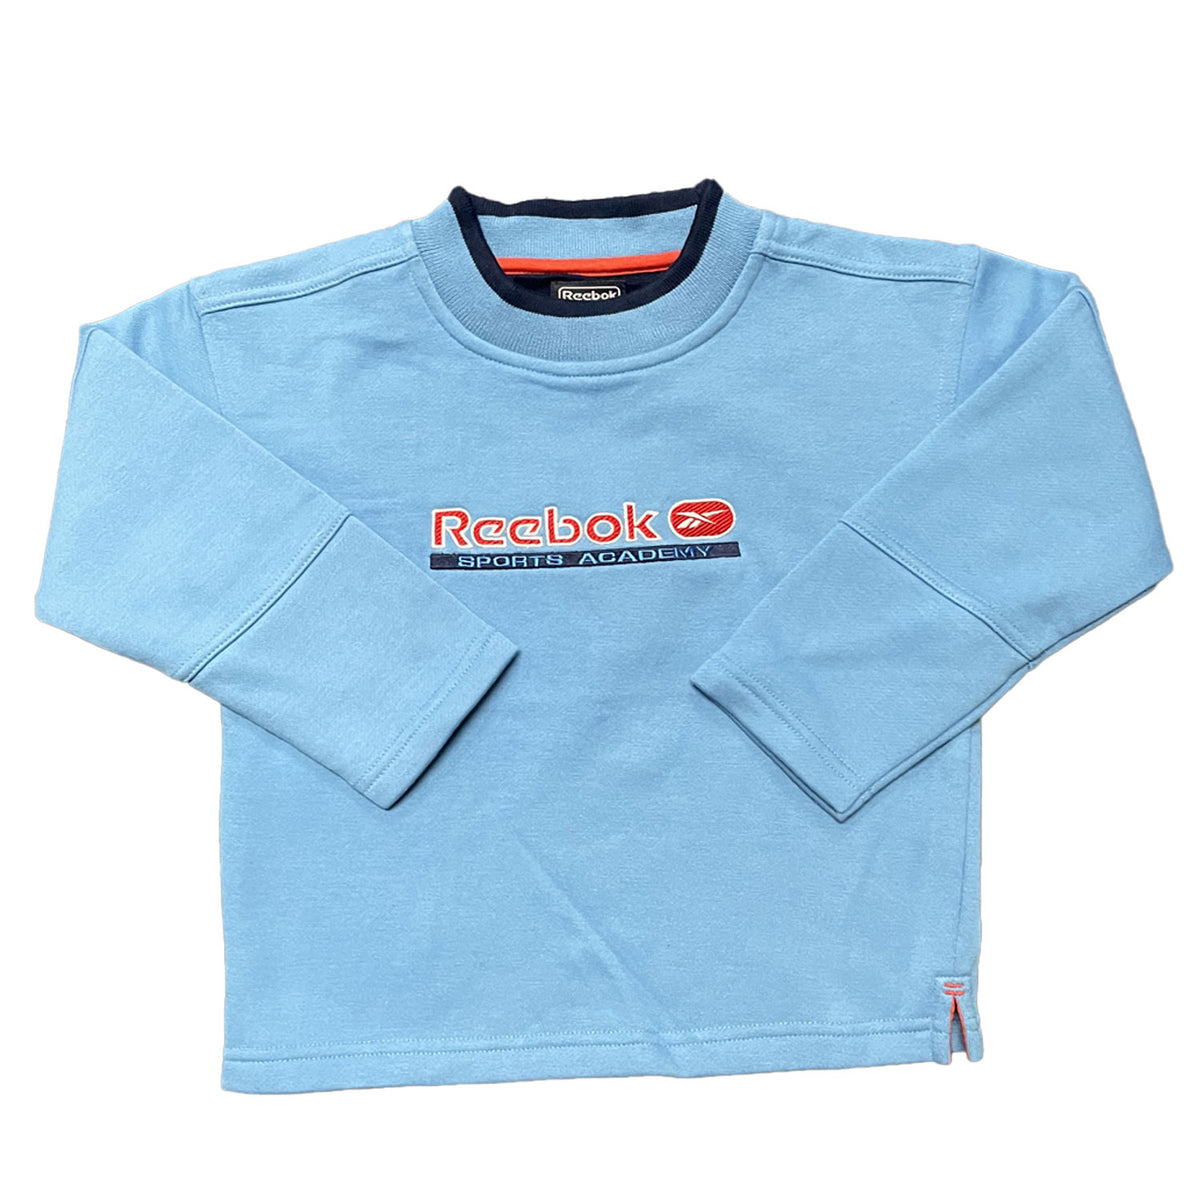 Reebok's Infant Sports Academy Sweatshirt 5